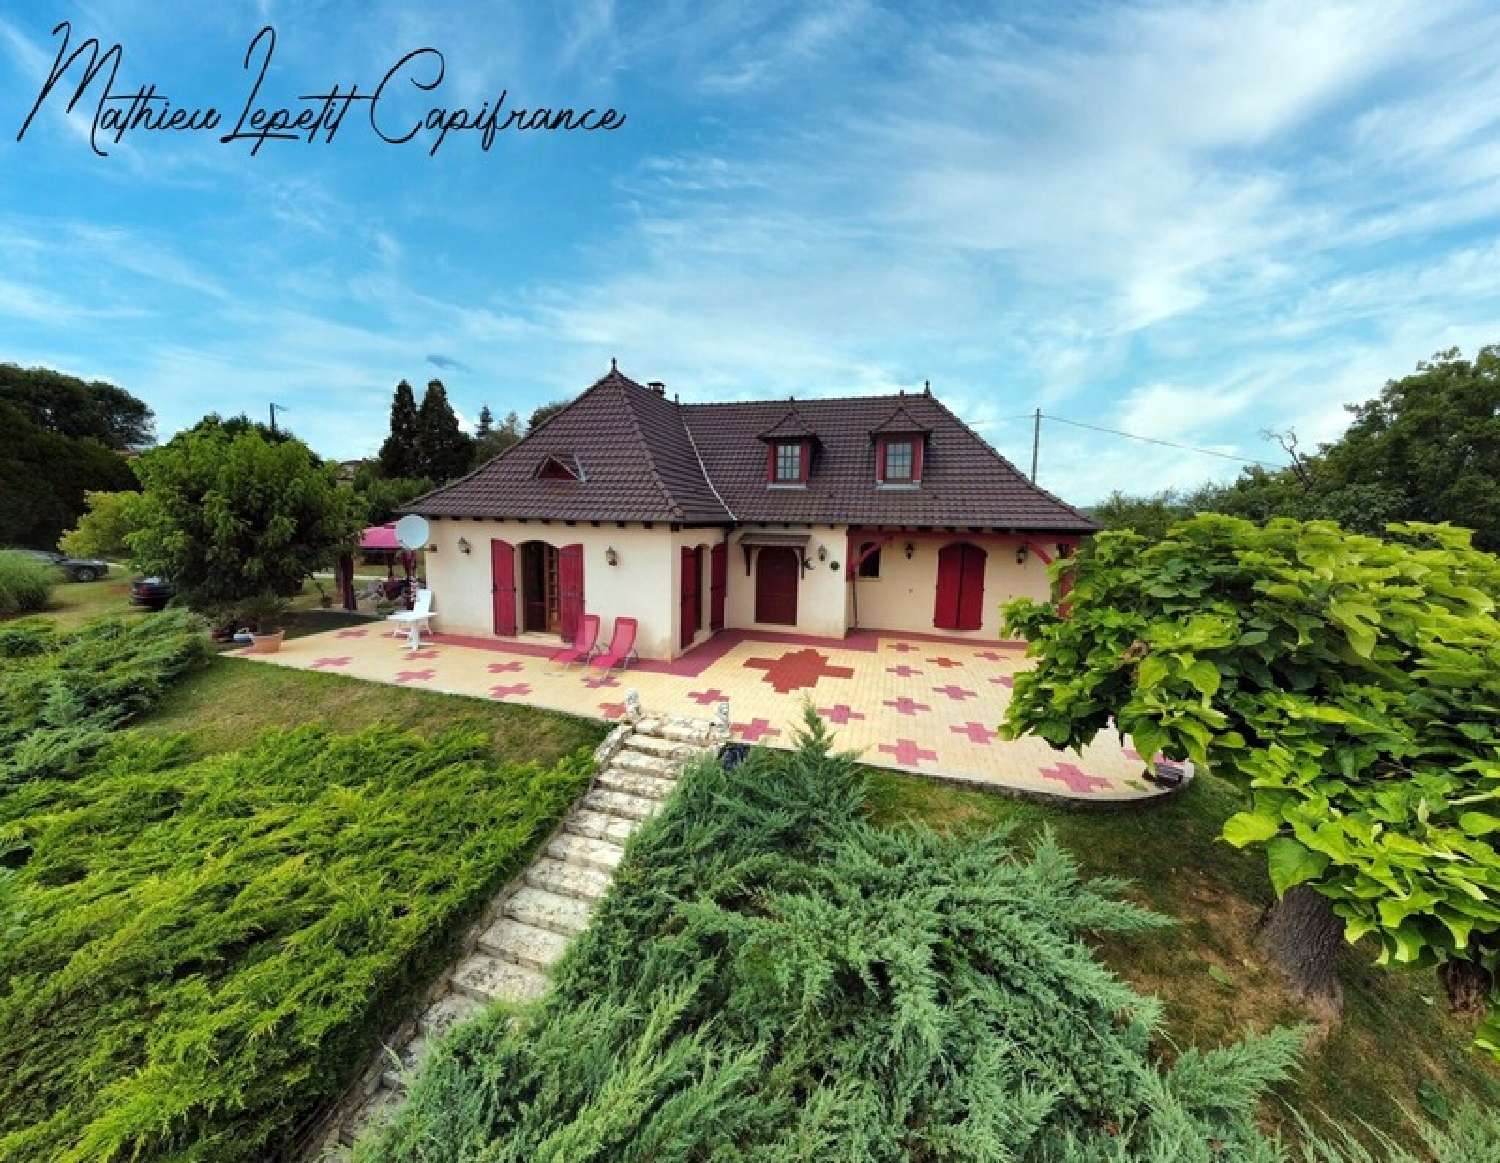  à vendre maison Thenon Dordogne 1